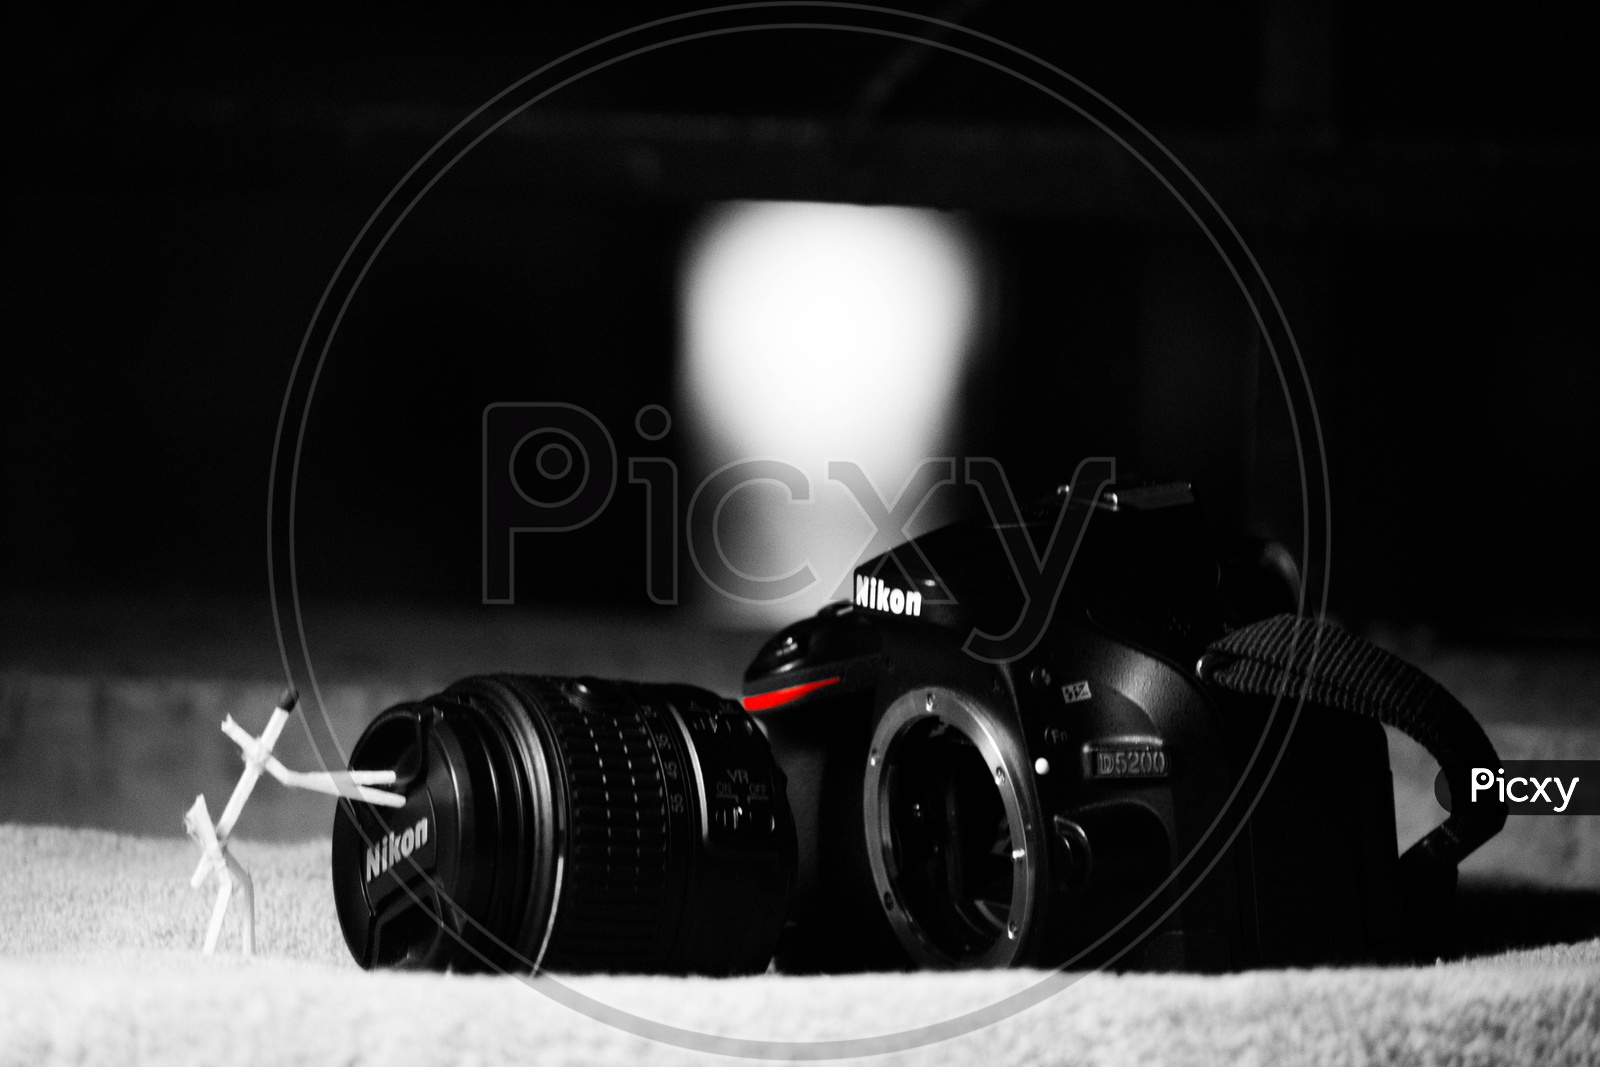 Nikon D5200 DSLR Camera and Lens